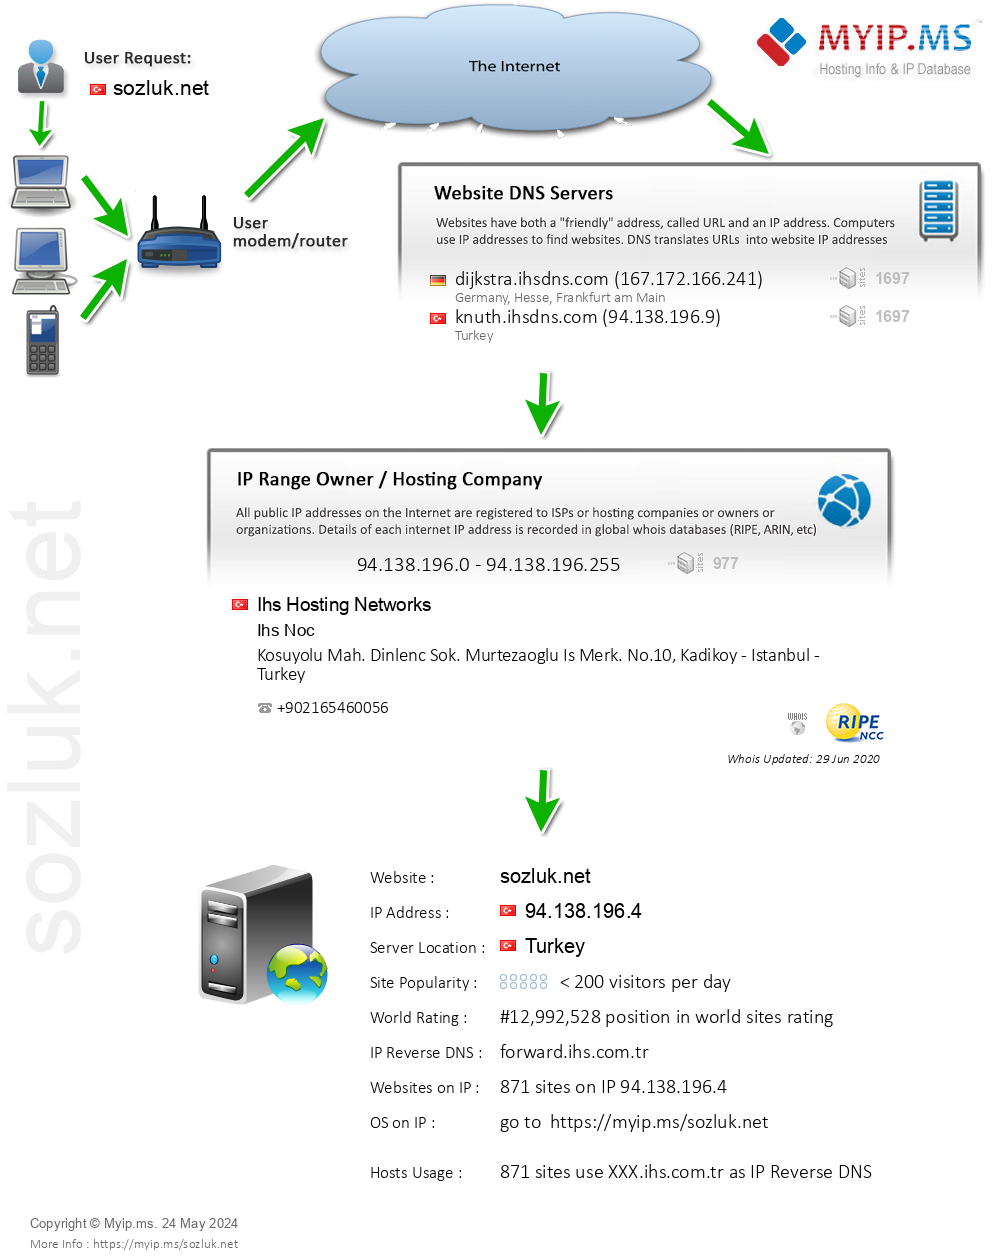 Sozluk.net - Website Hosting Visual IP Diagram